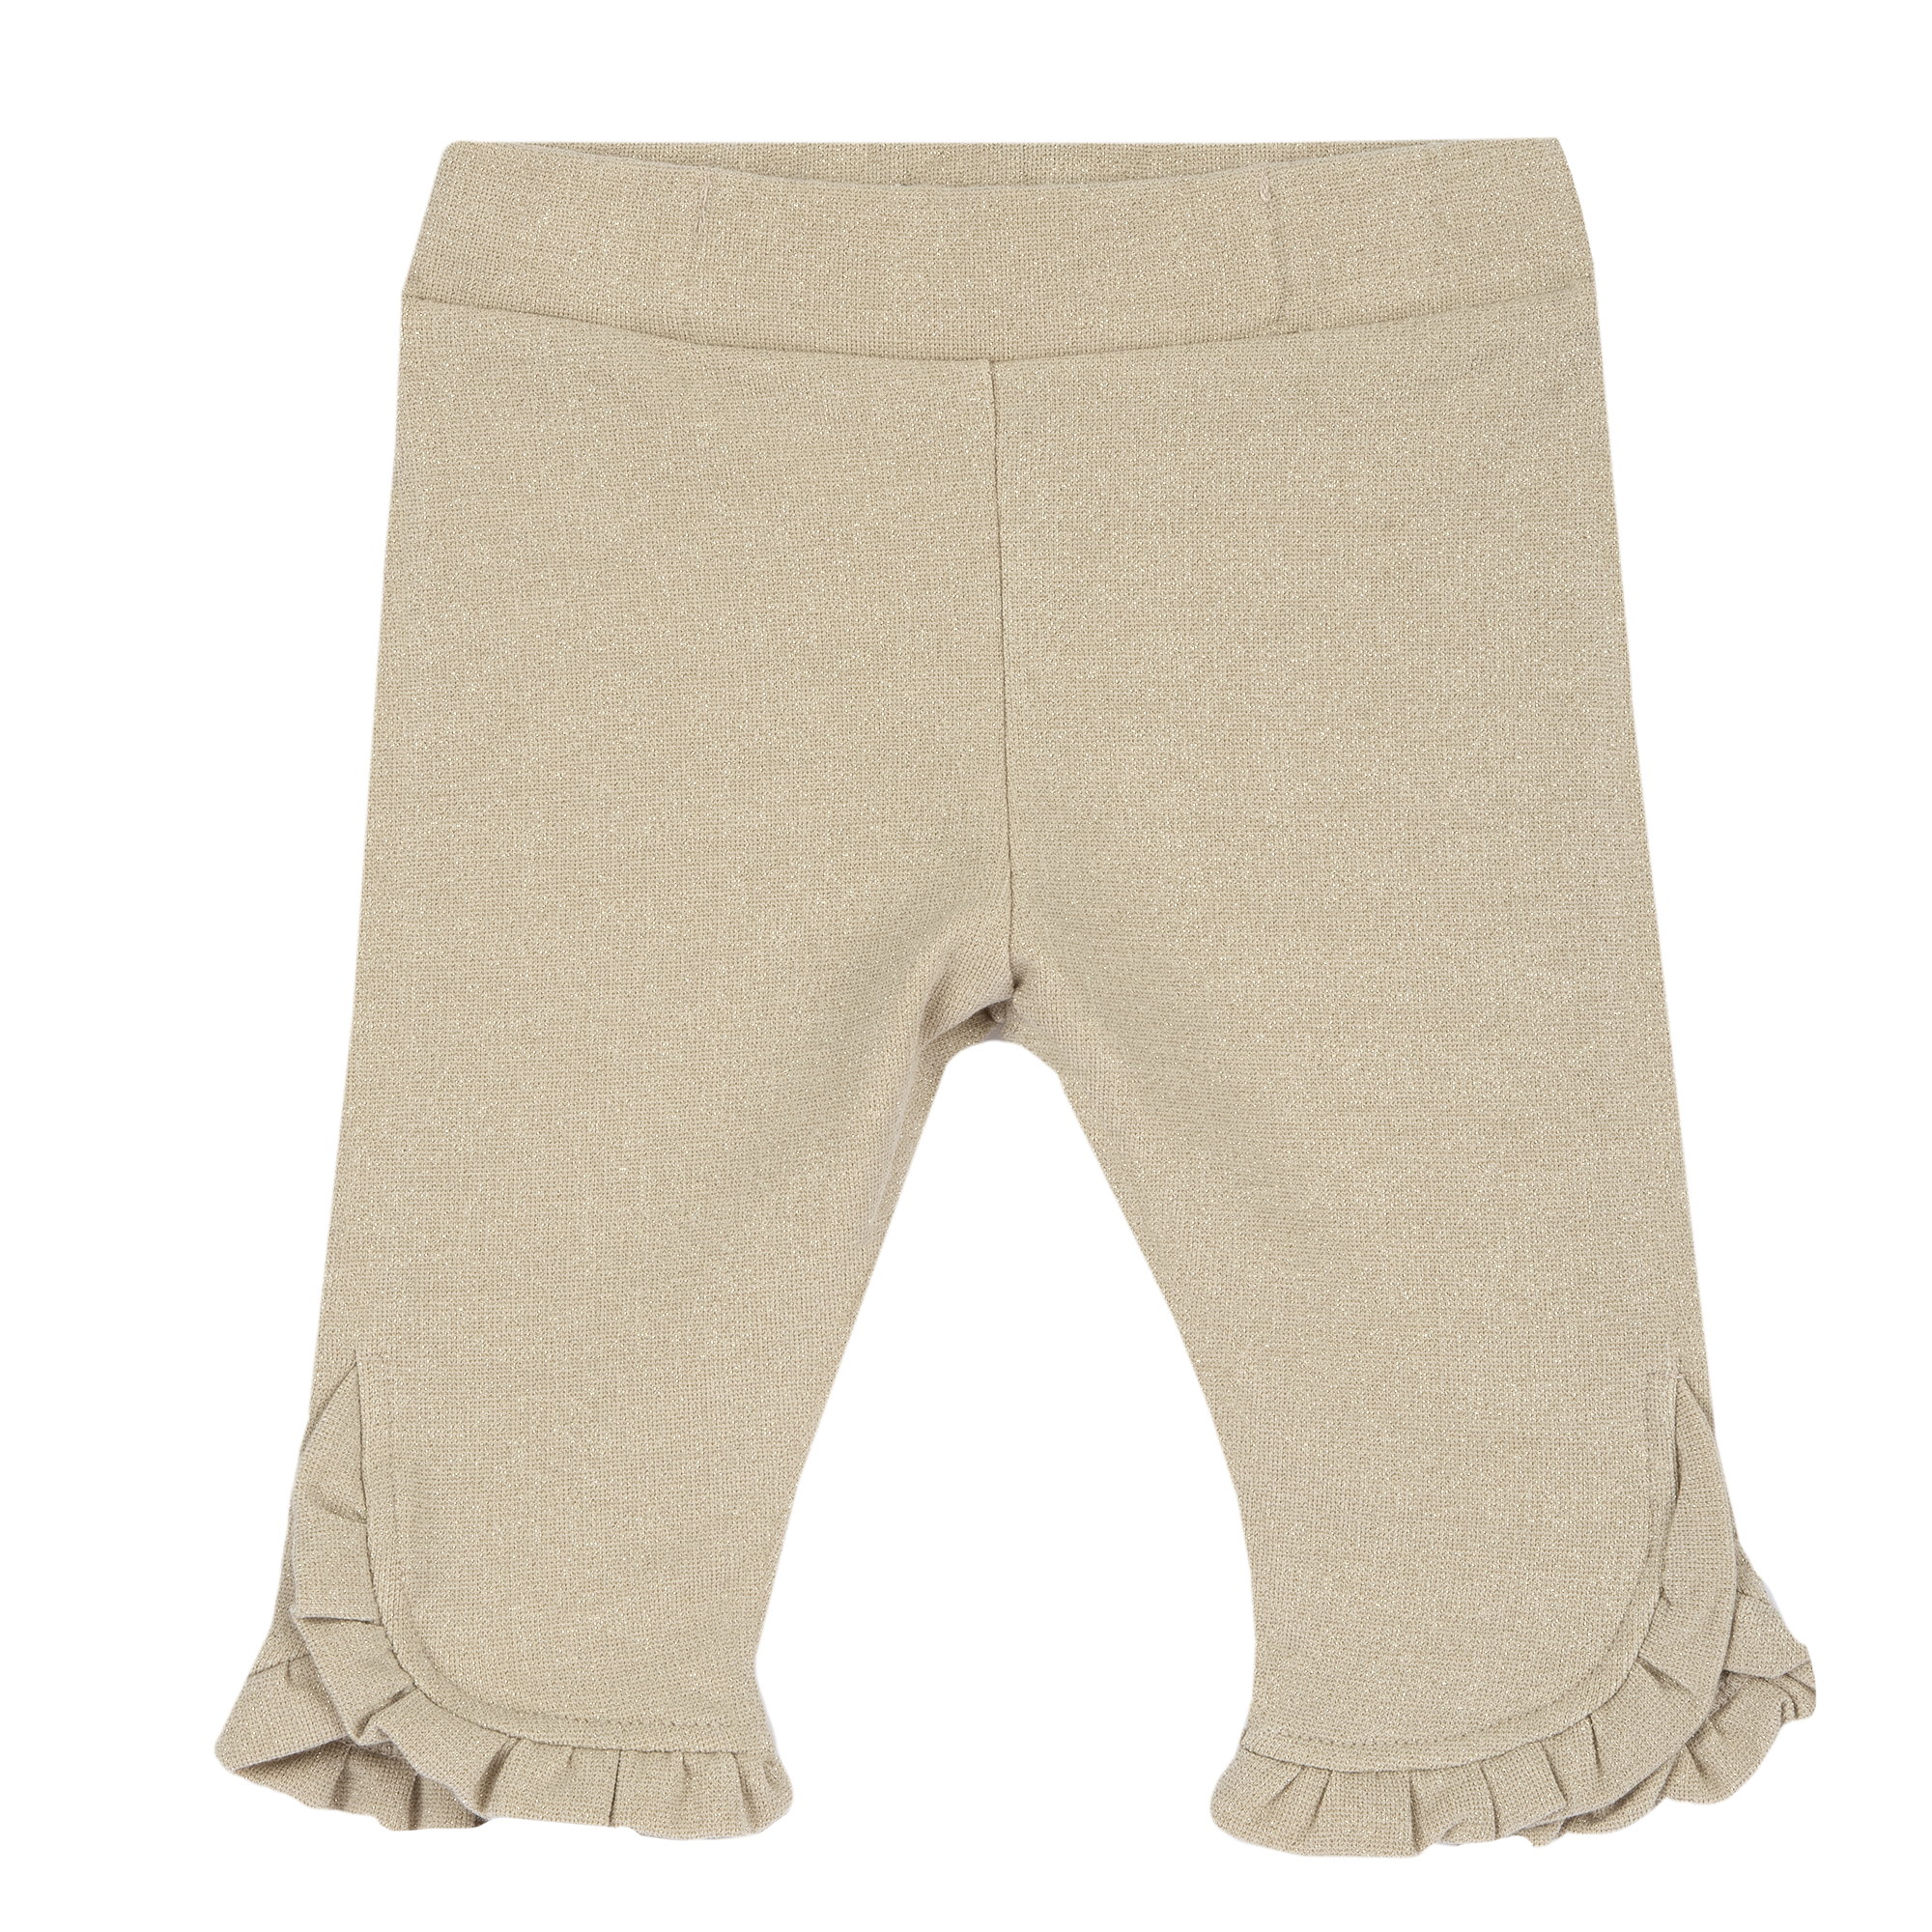 Pantaloni Copii Chicco, Bej, 55759-66mfci